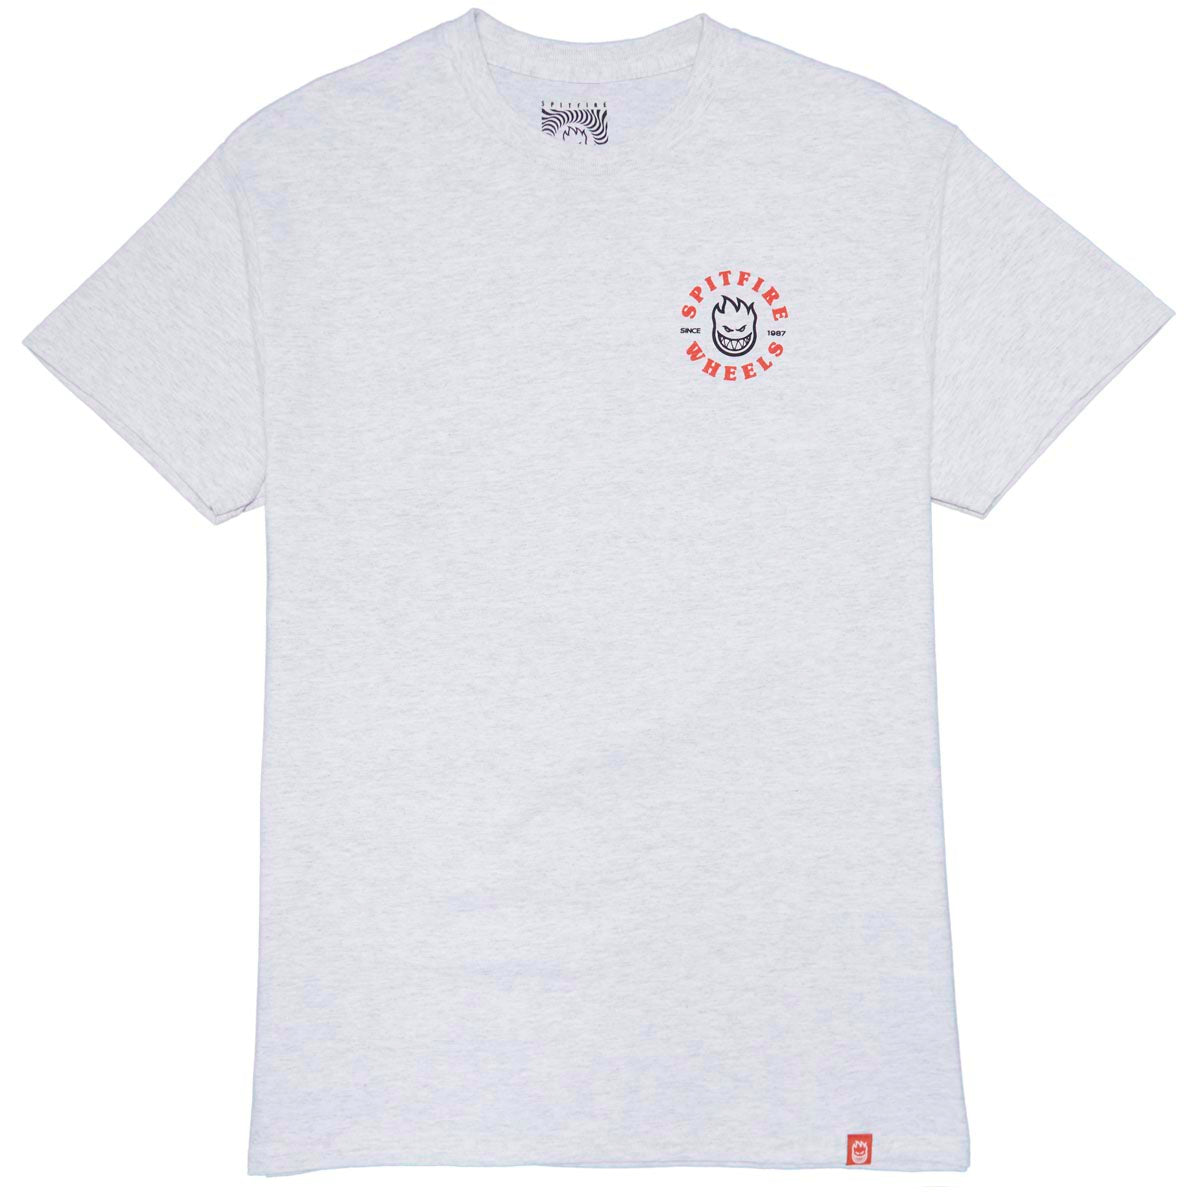 Spitfire Bighead Classic Short Sleeve T-Shirt (Ash/Red/Black) - Apple Valley Emporium